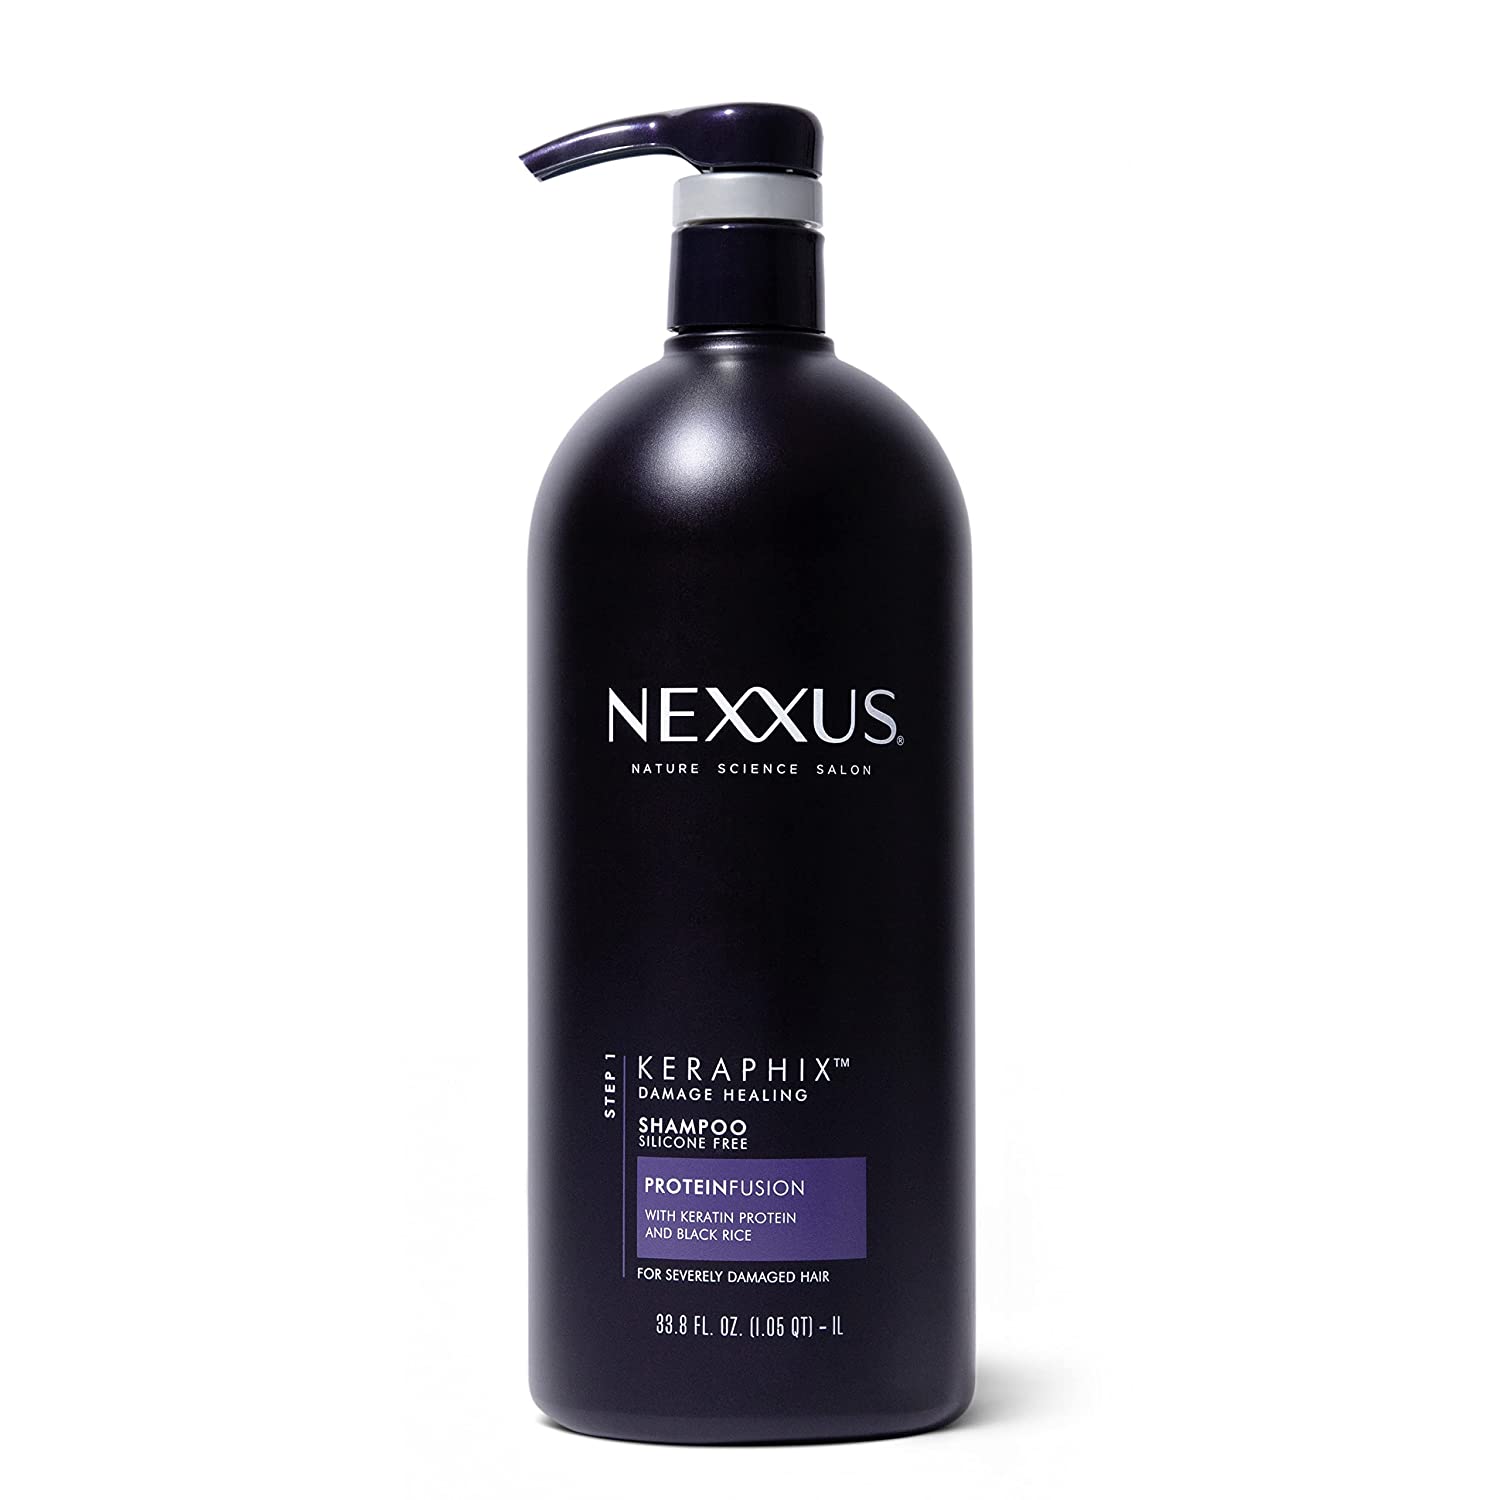 Nexxus Keraphix Shampoo for Damaged Hair With Protein